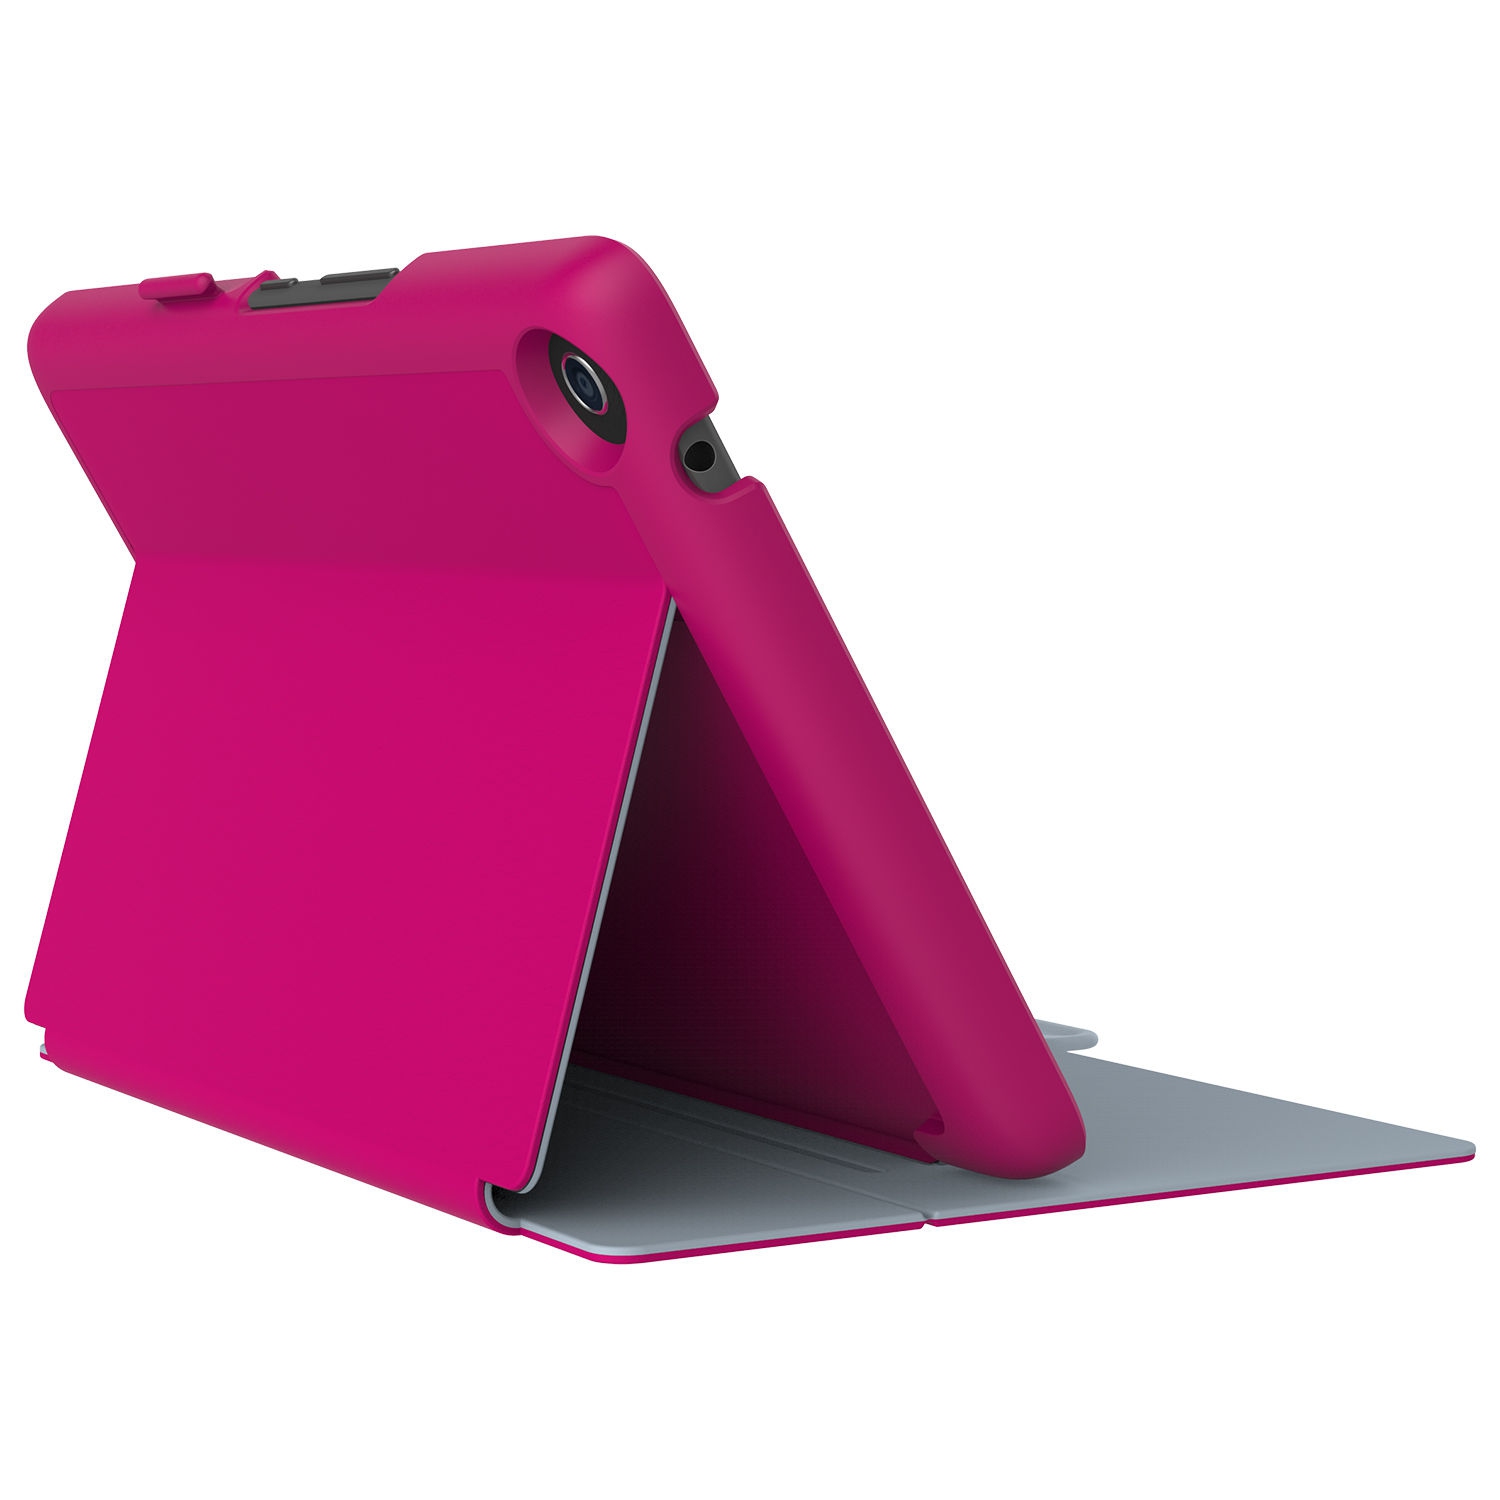 Speck Stylefolio Tablet Case ASUS ZenPad Z8 Fuchsia Pink Nickel Grey 79533-B920